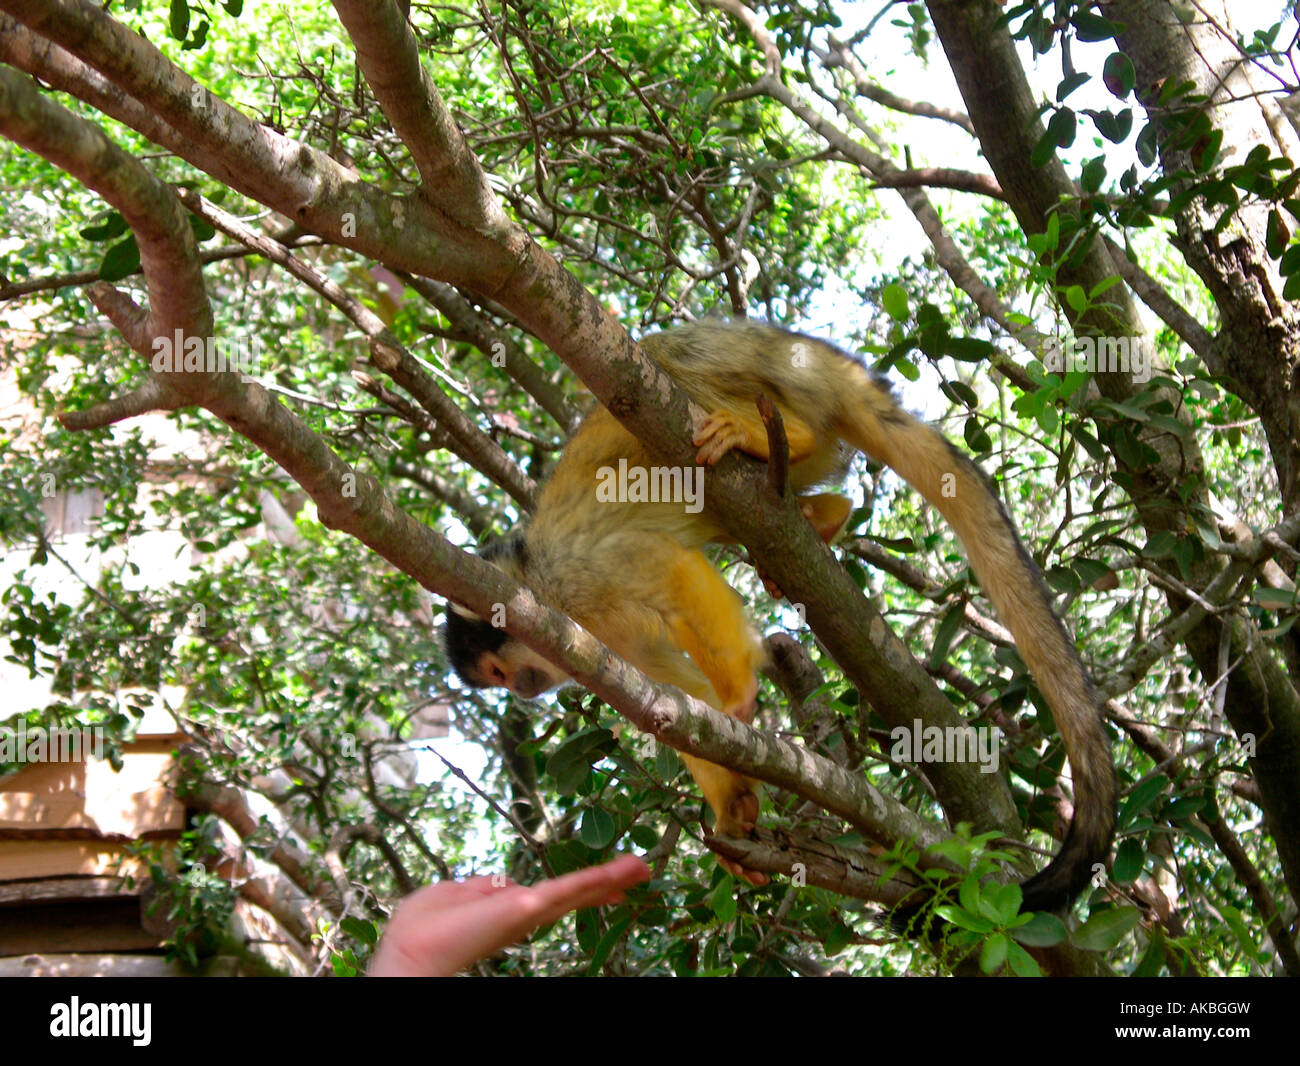 Monkey 2, monkey on tree branch Stock Photo